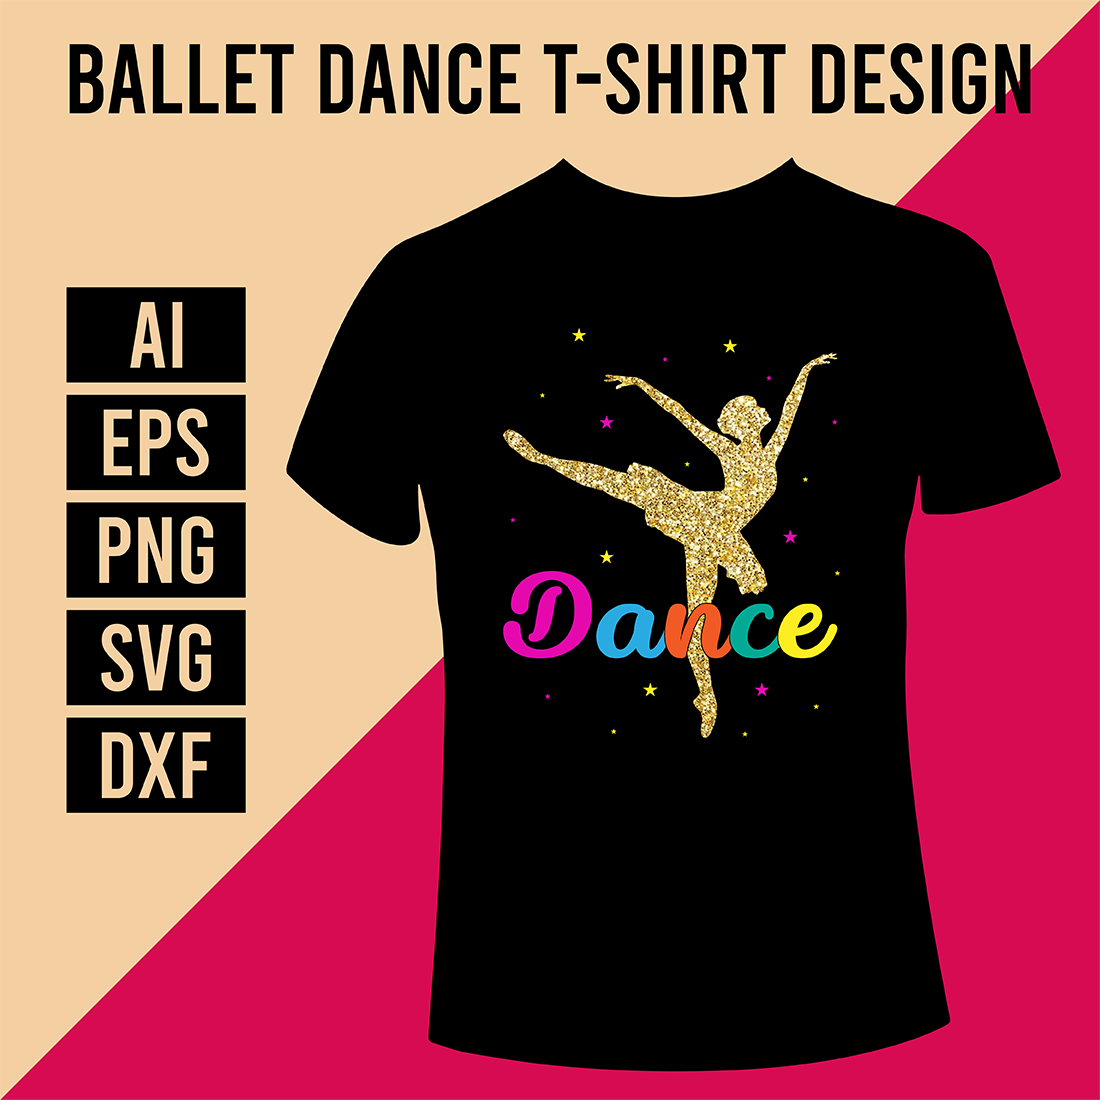 Ballet Dance T-Shirt Design cover image.